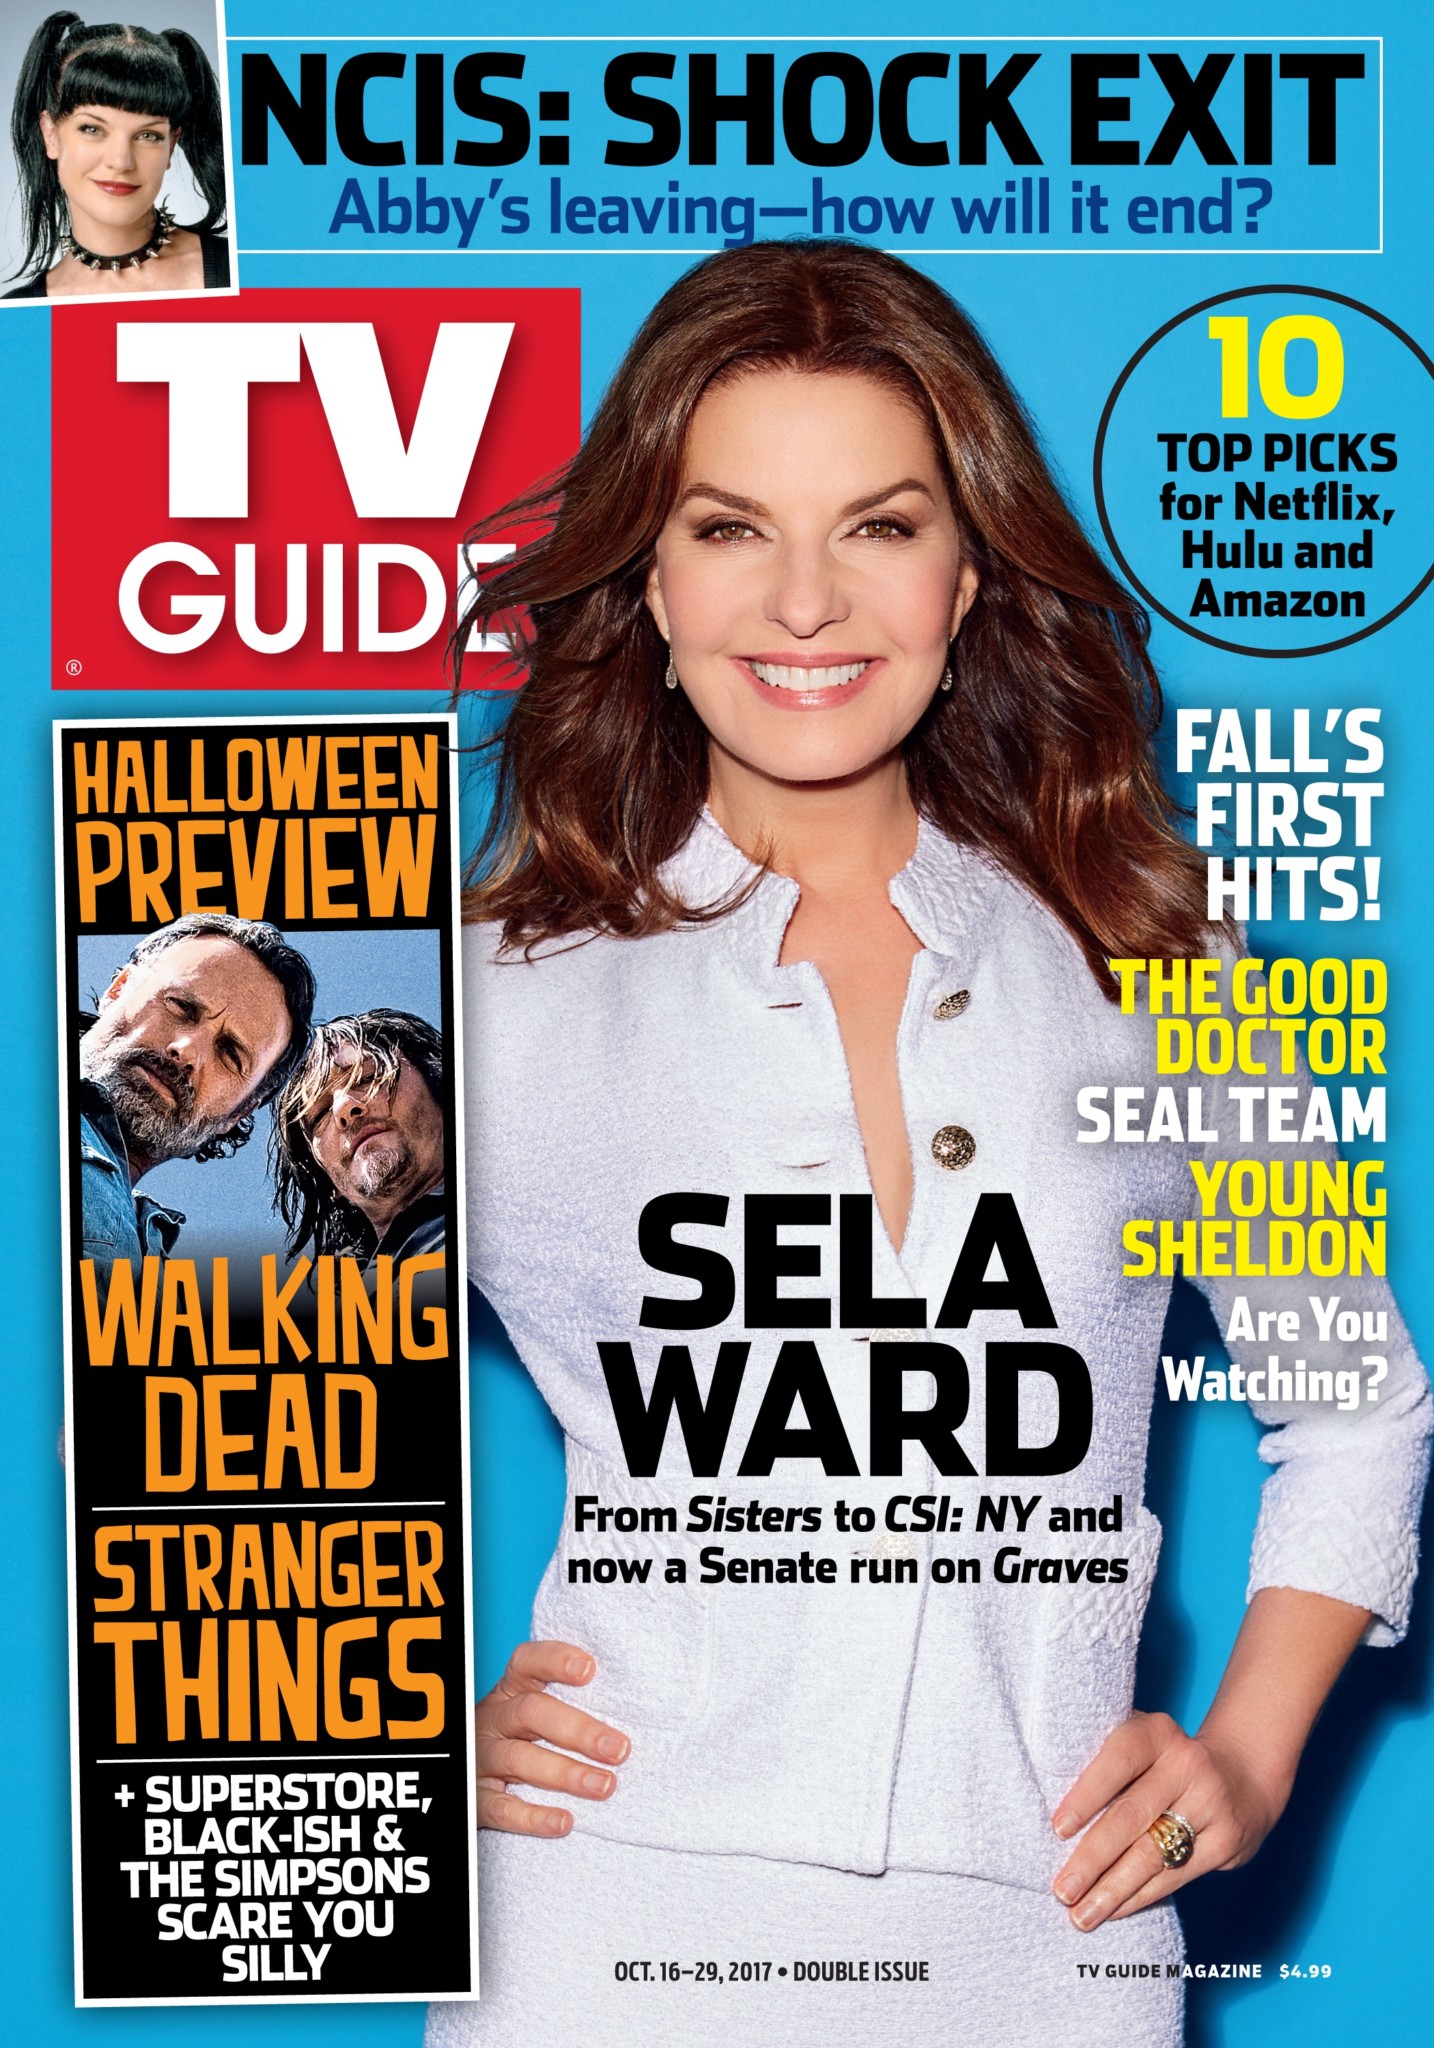 Tv magazine. TV Guide. USA TV Guide. TV Guide Magazine. TV Guide Weekly.